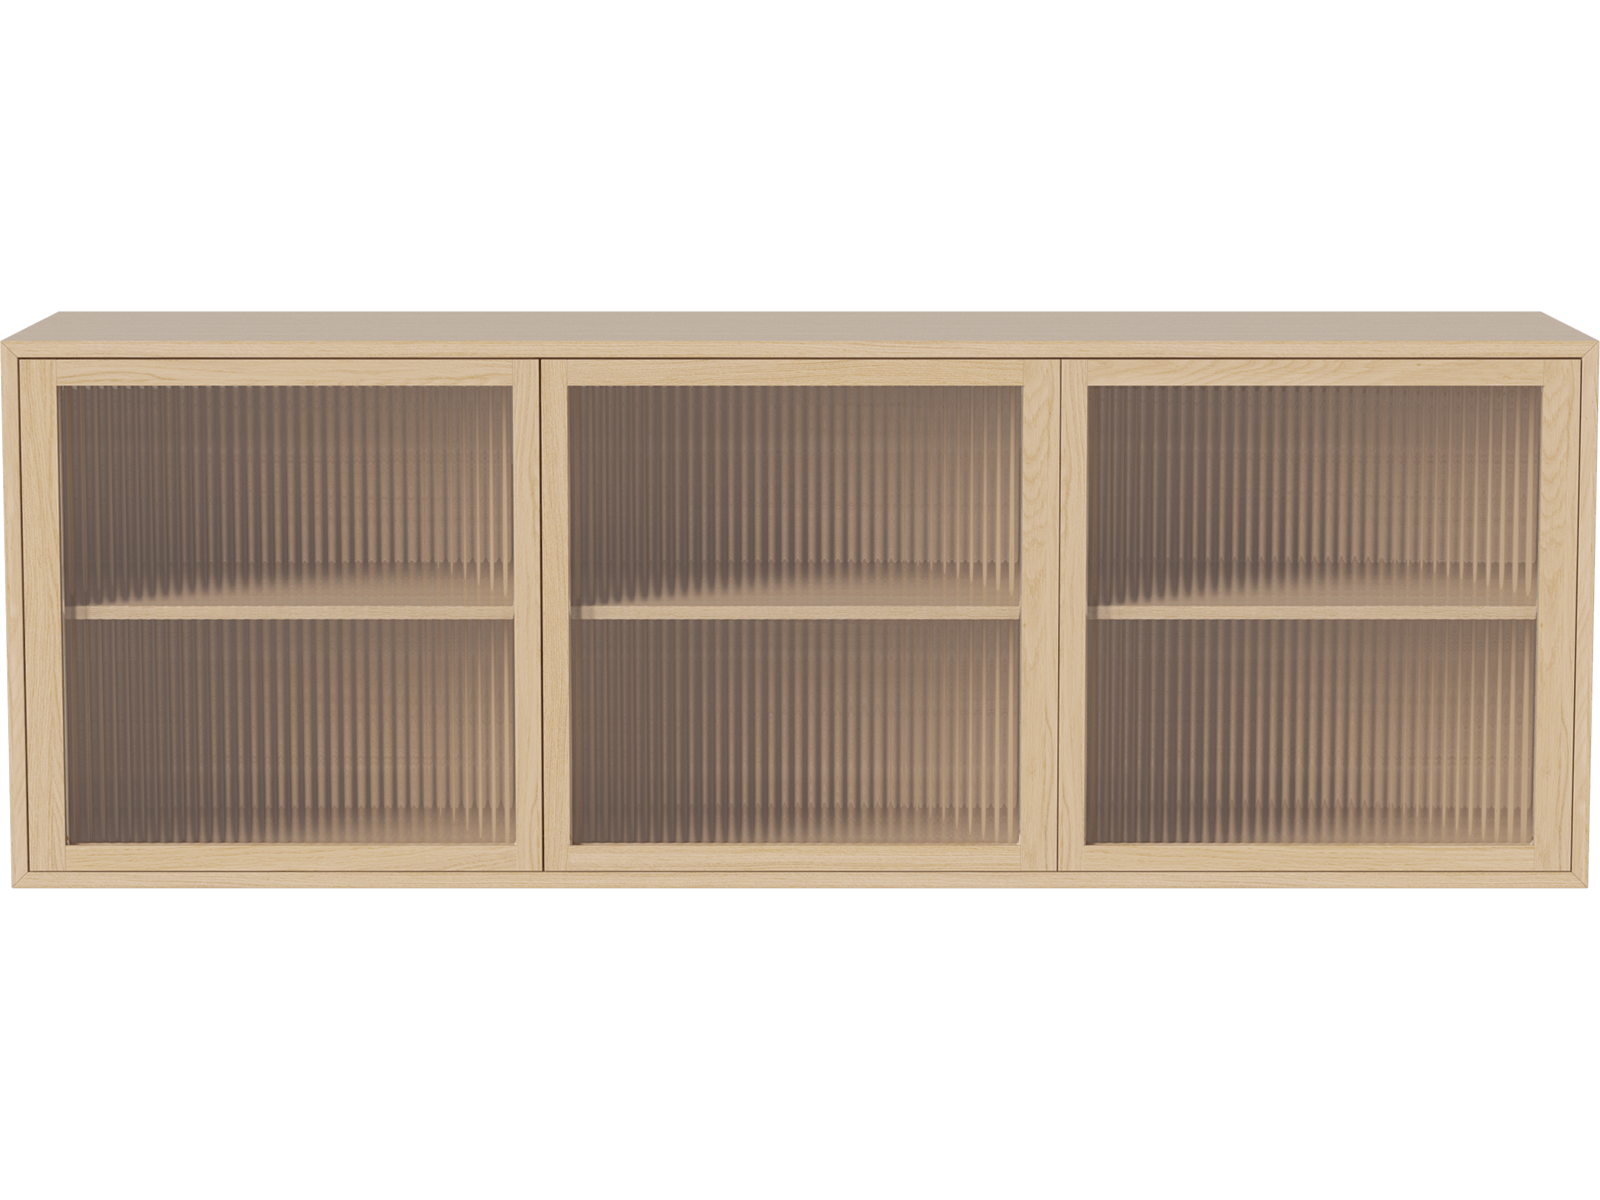 bolia-case-sideboard-with-shelves-3-glass-doors-white-oak-case-komod-polcokkal-3-uvegajto-tolgy